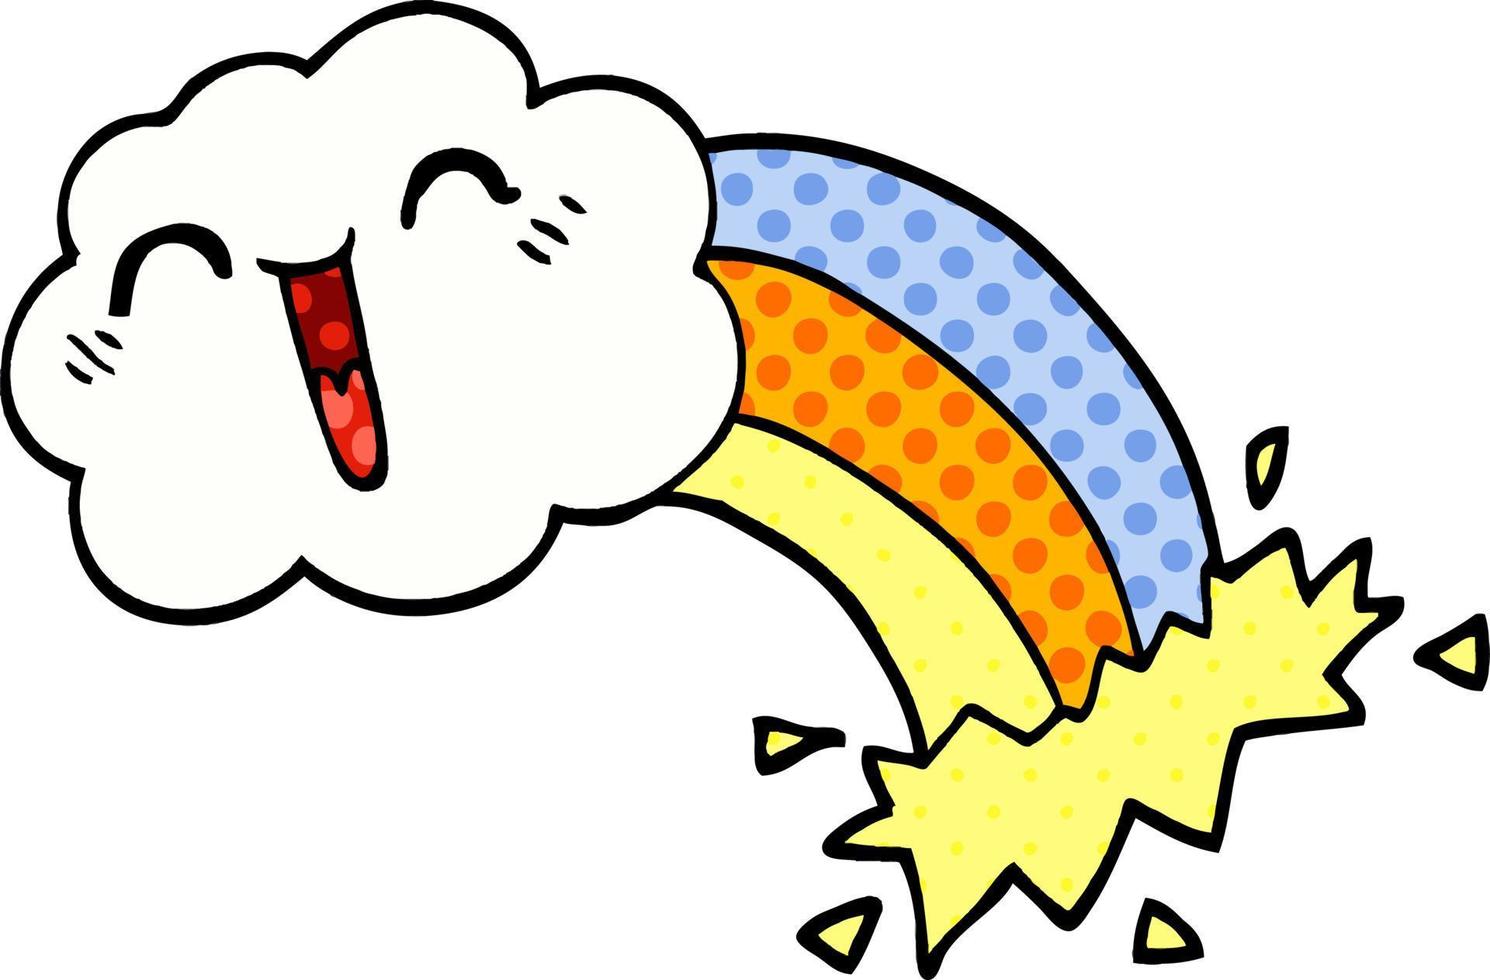 cartoon doodle happy cloud and rainbow vector